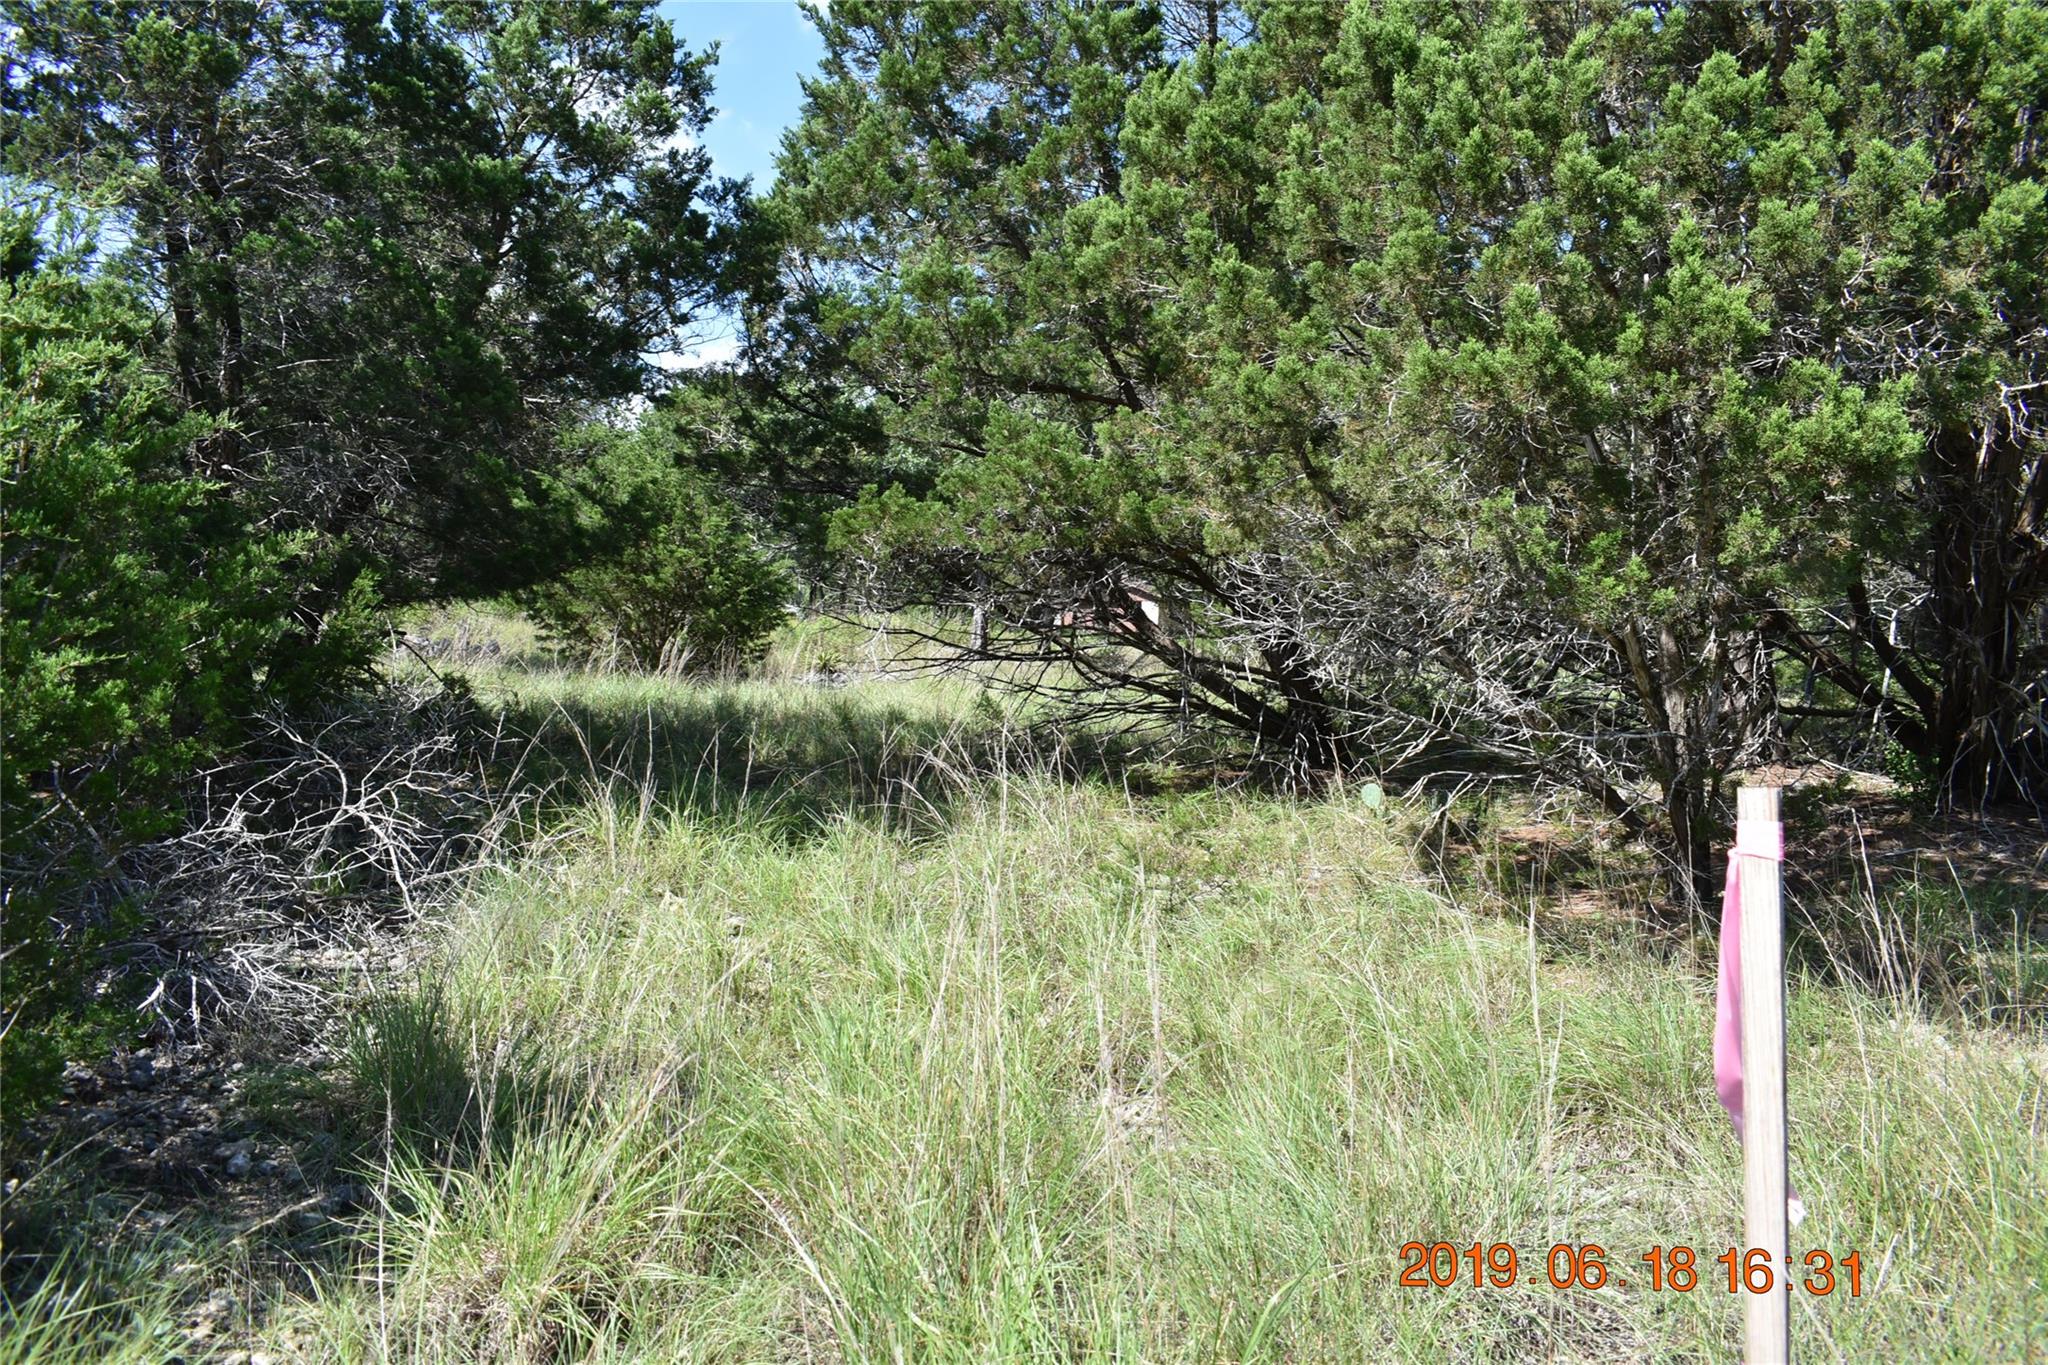 Photo 5 of 6 of (8105) (Lot 35B) Bear Creek DR land